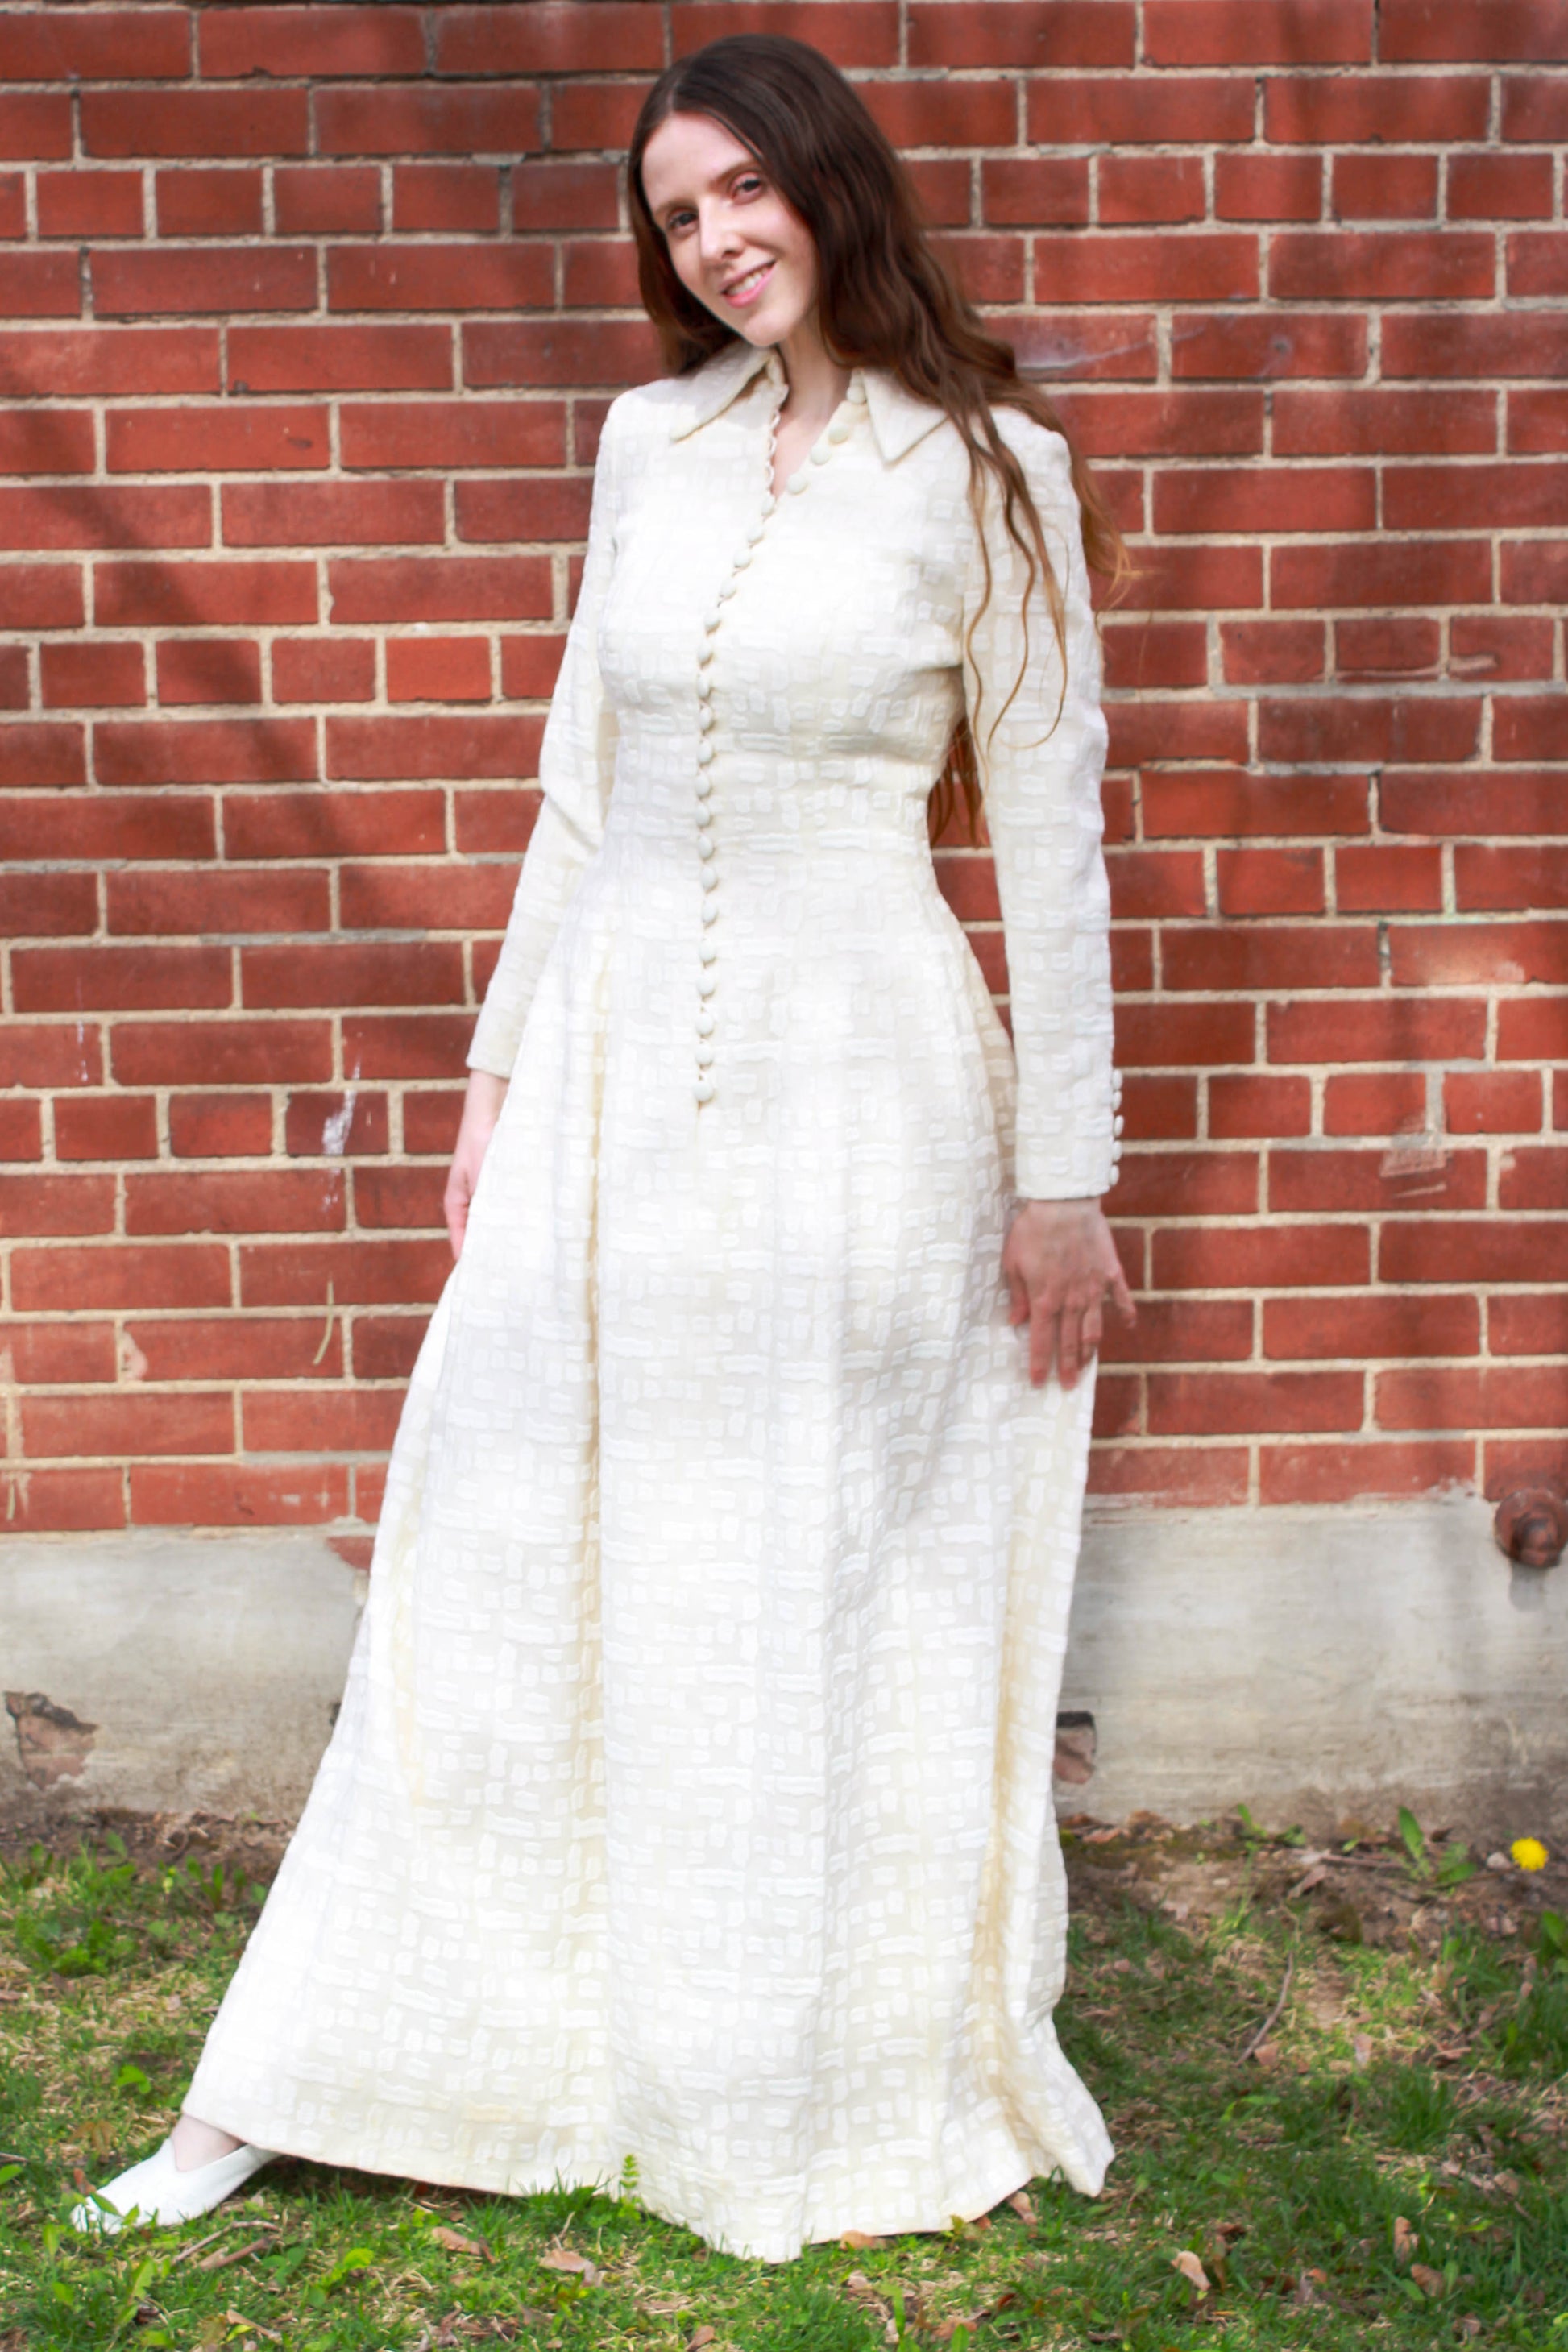 Robert Louis Womens Long Maxi Dress Sleeveless Black/White Size Medium